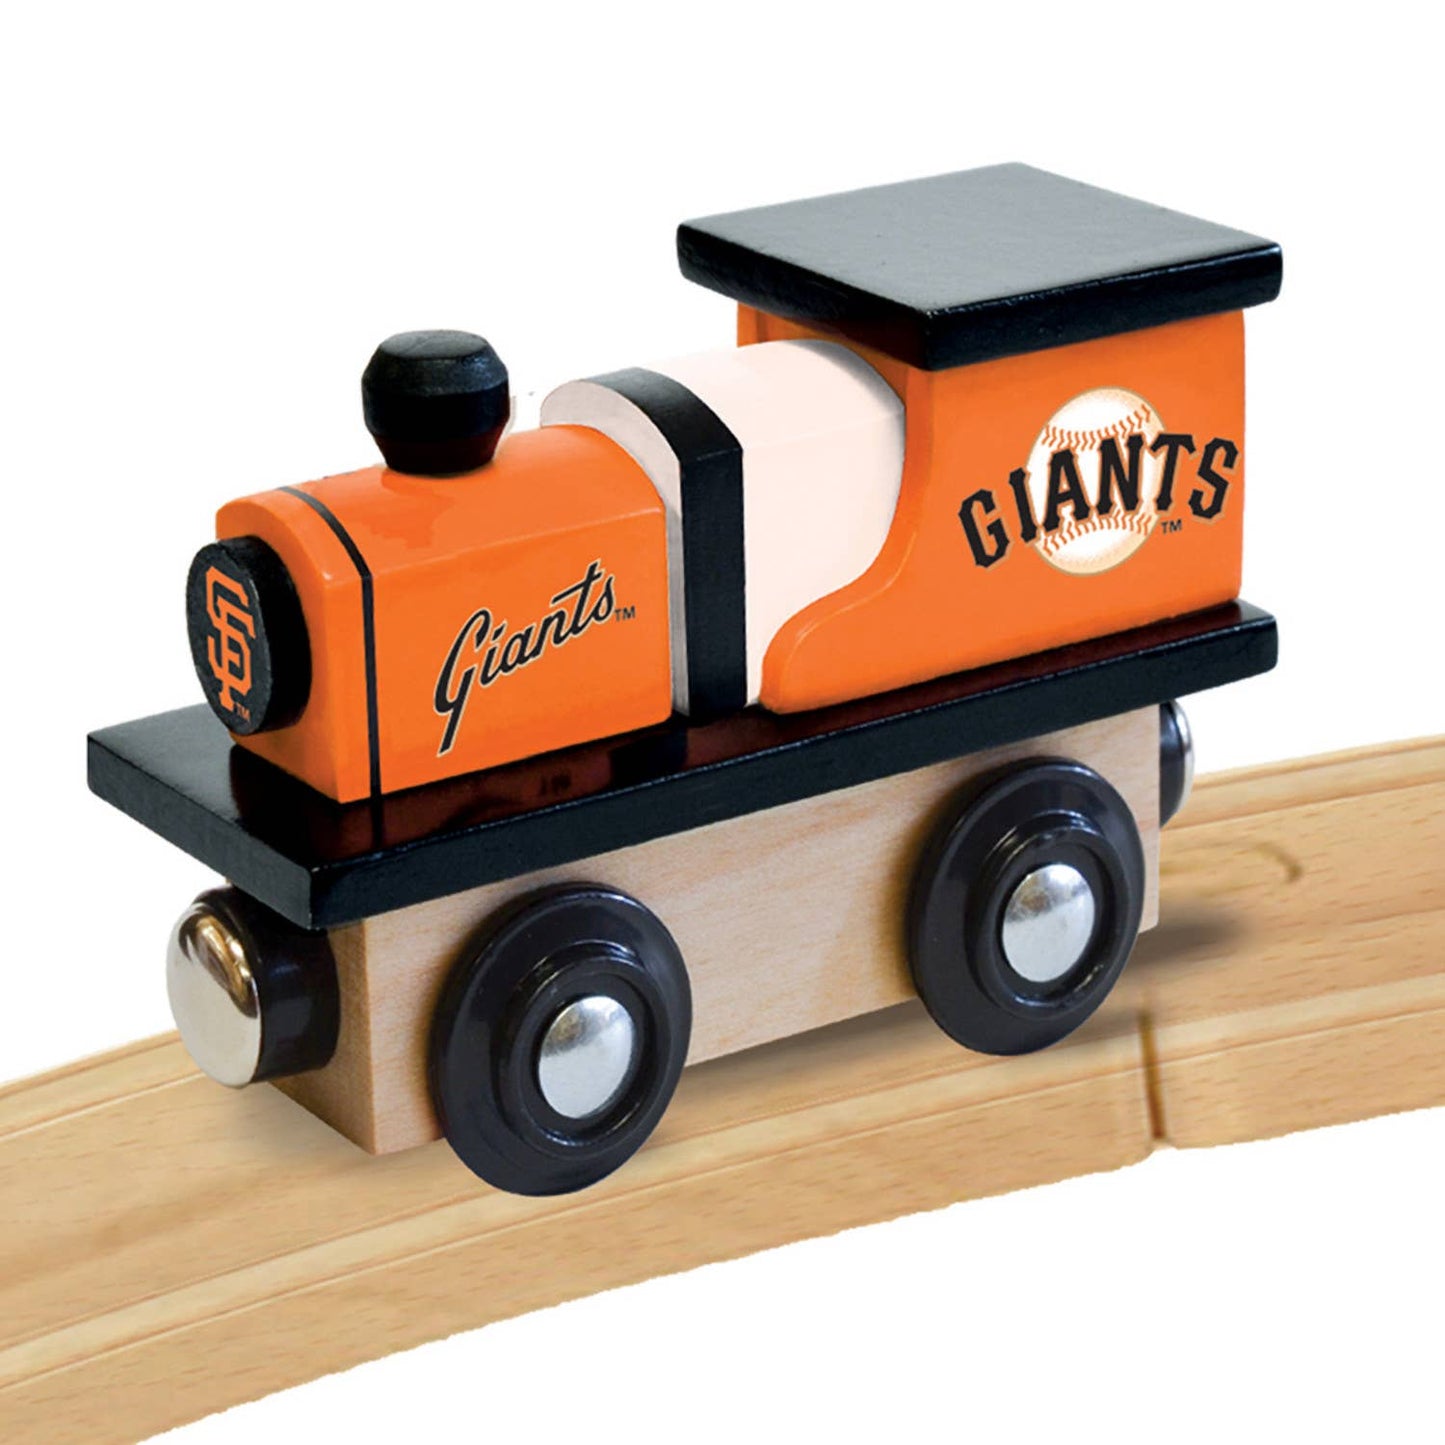 San Francisco Giants Toy Train Engine